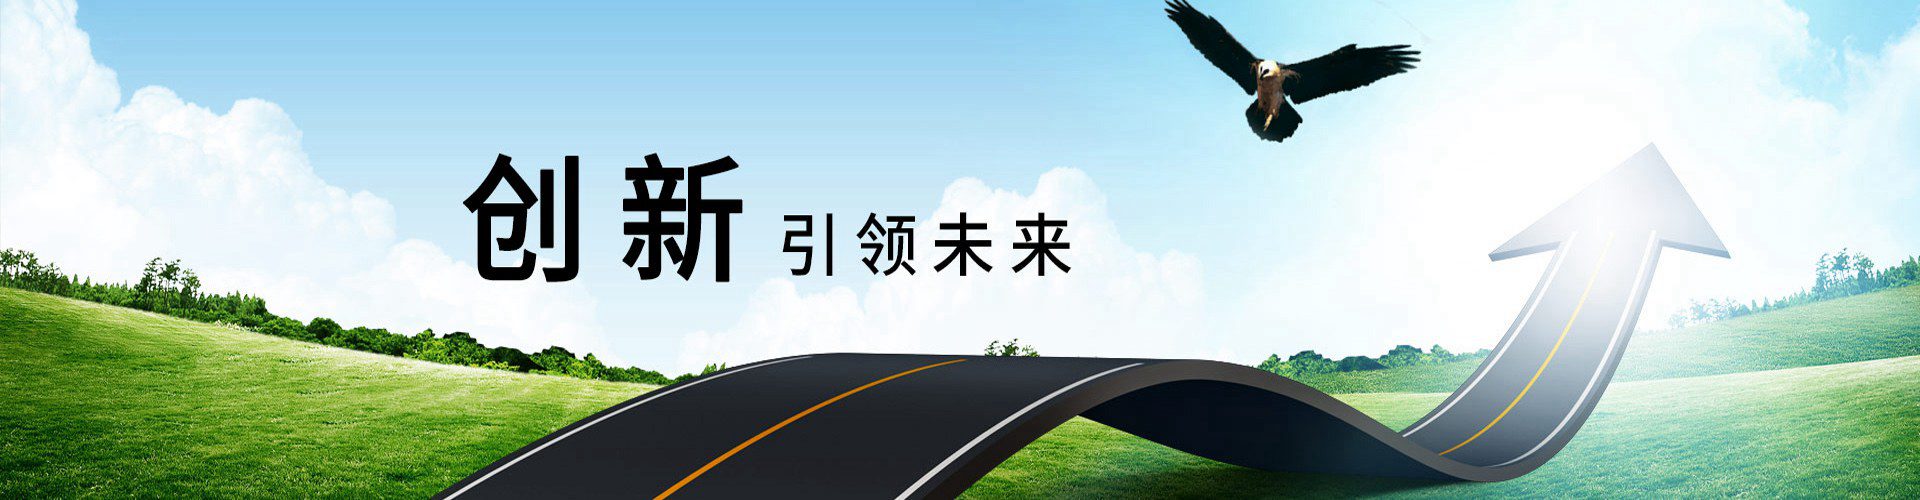 广州珠江电缆banner